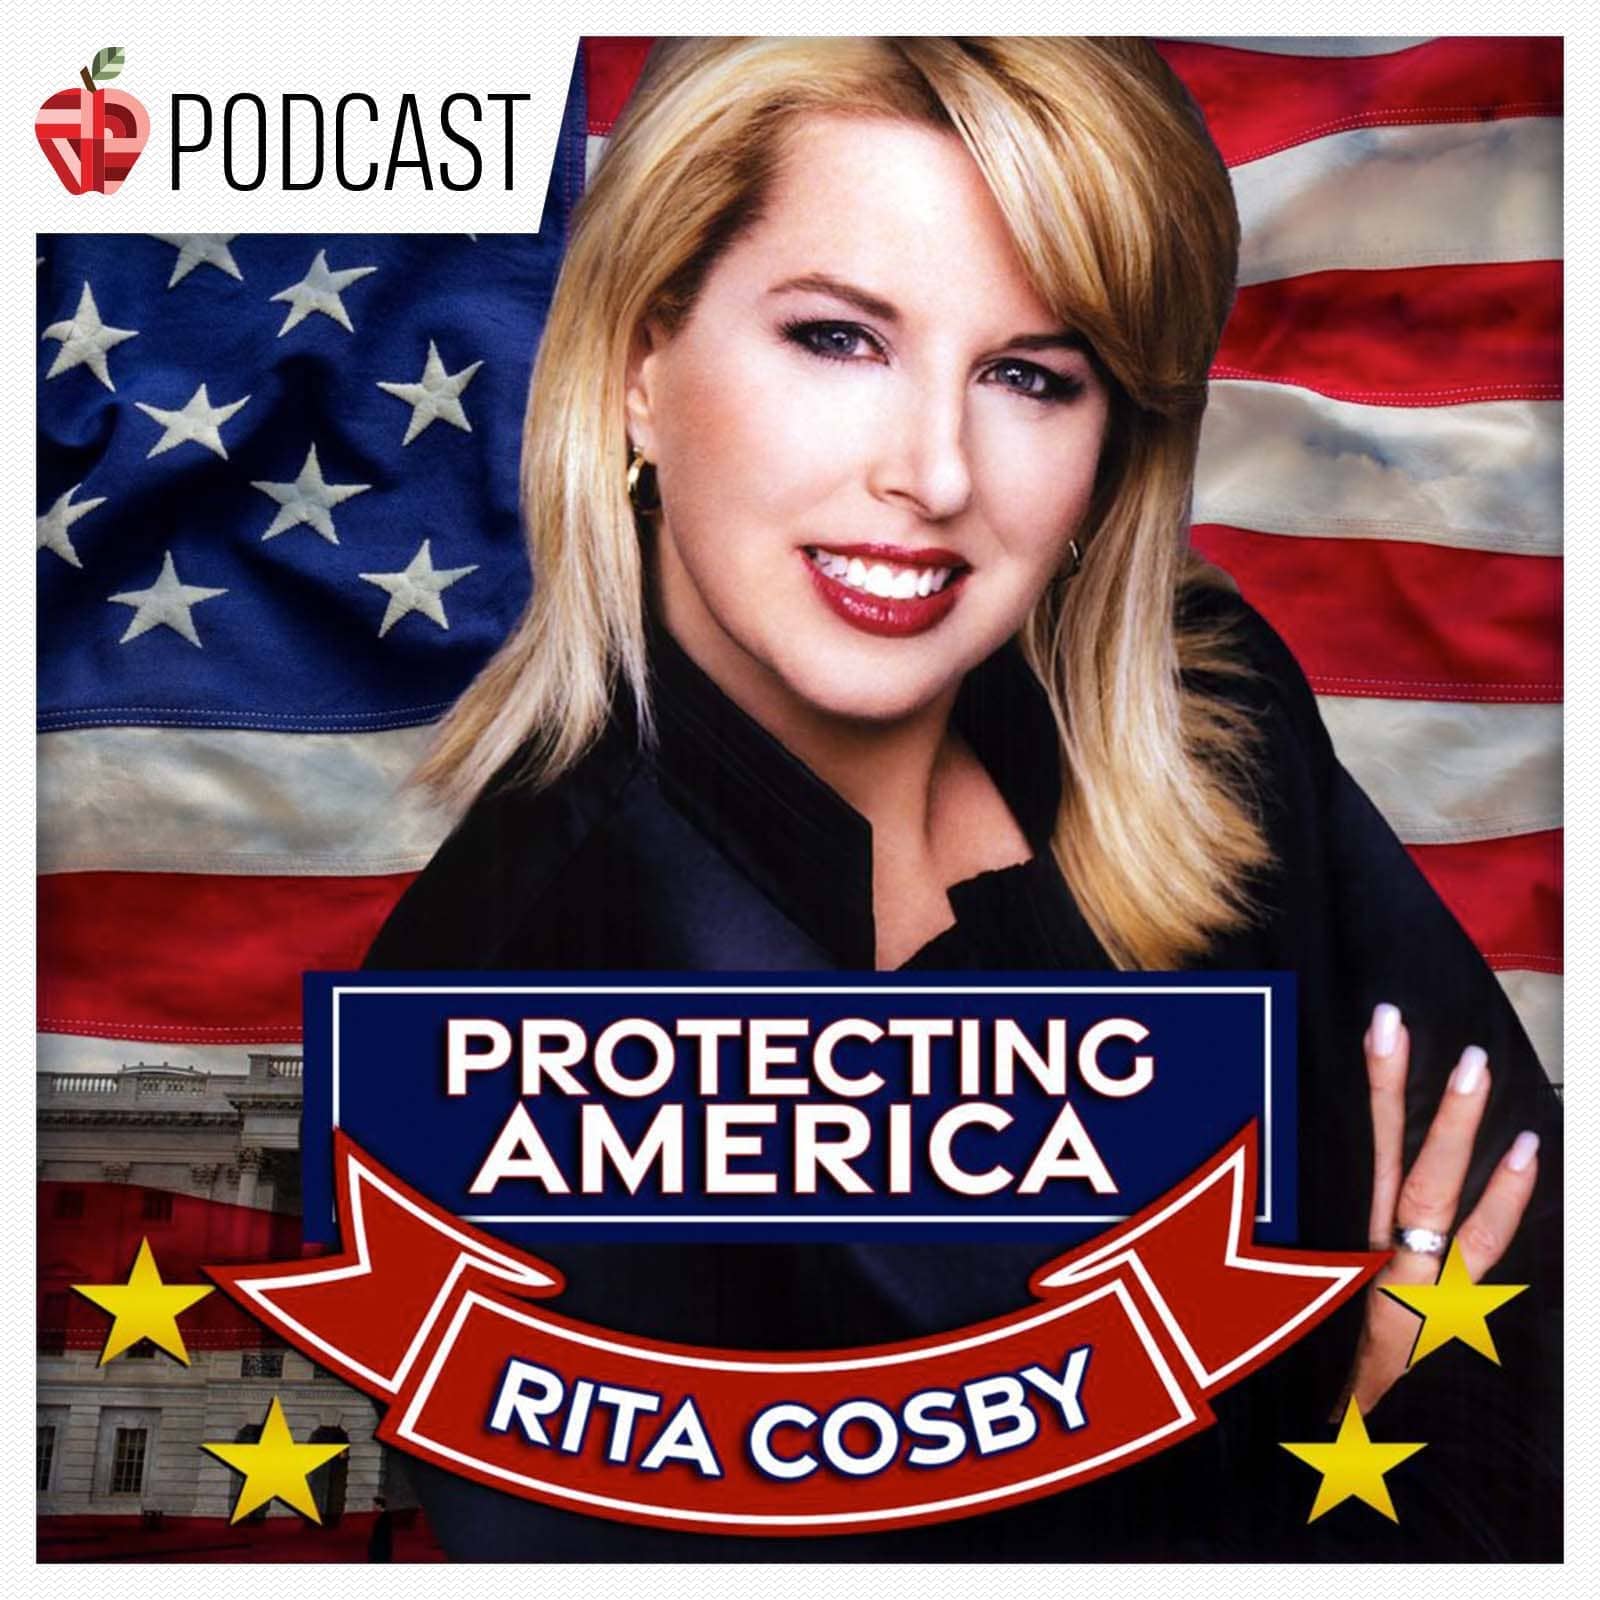 rita-cosby-protecting-america-correct-podcast-new-logo-45